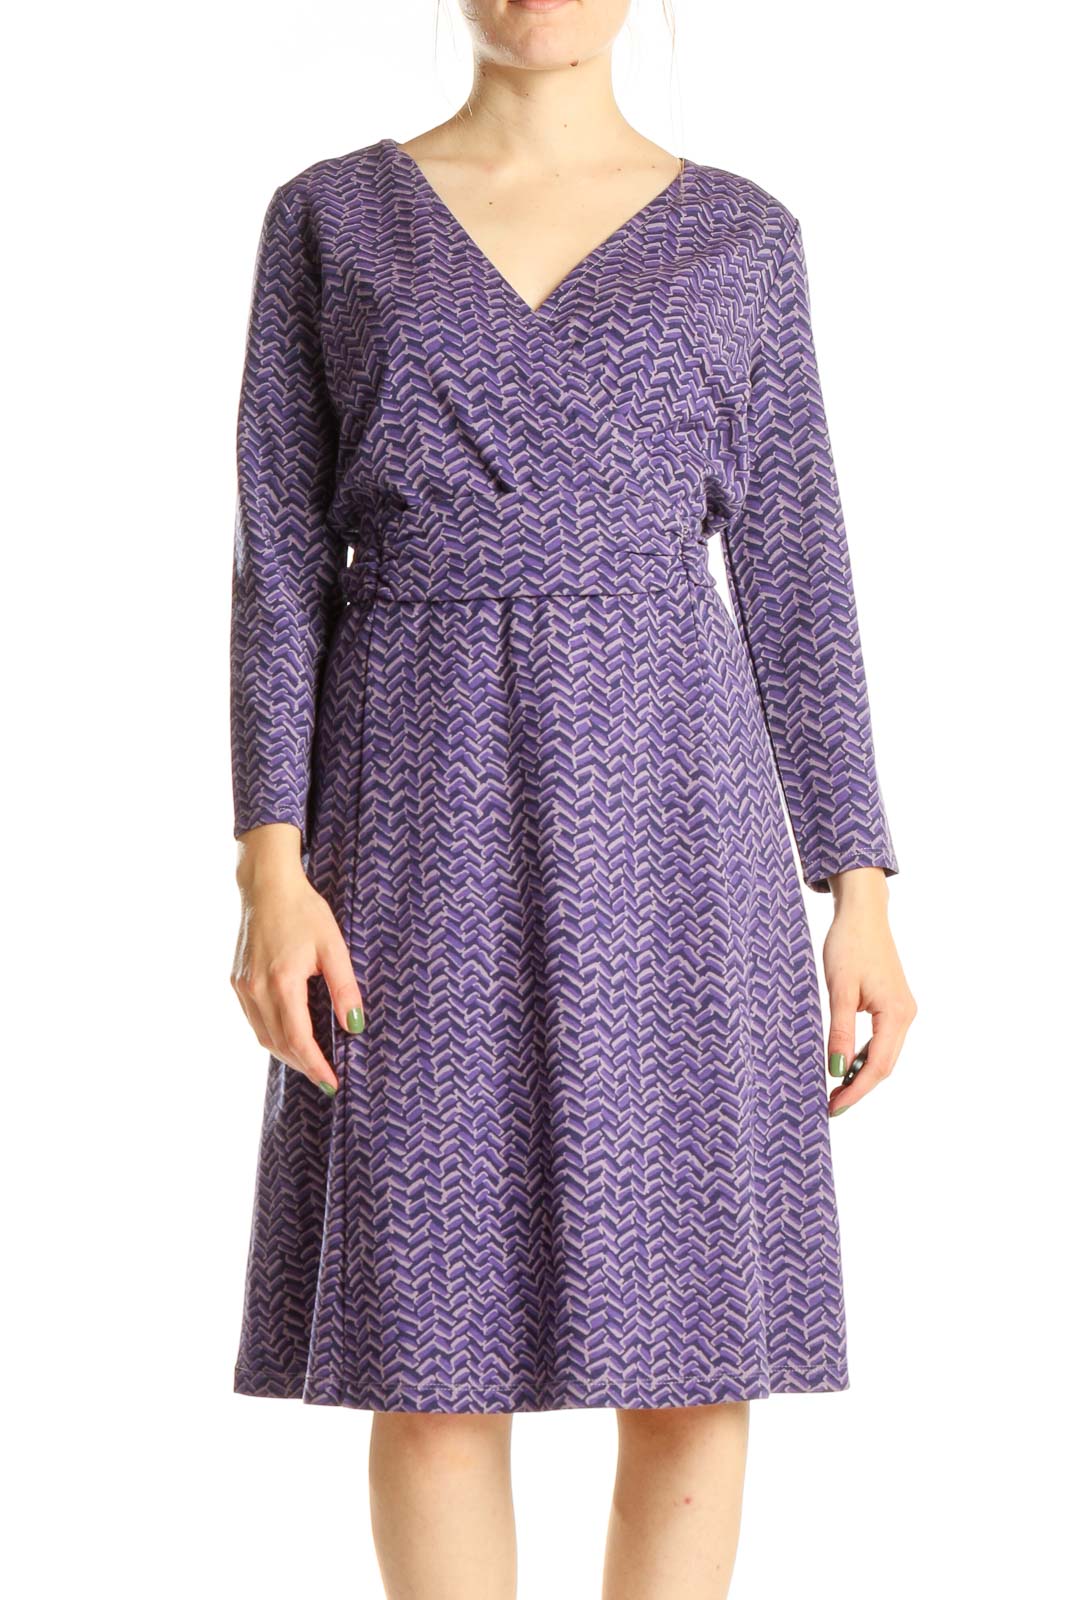 Purple Chevron Print Casual Dress Front